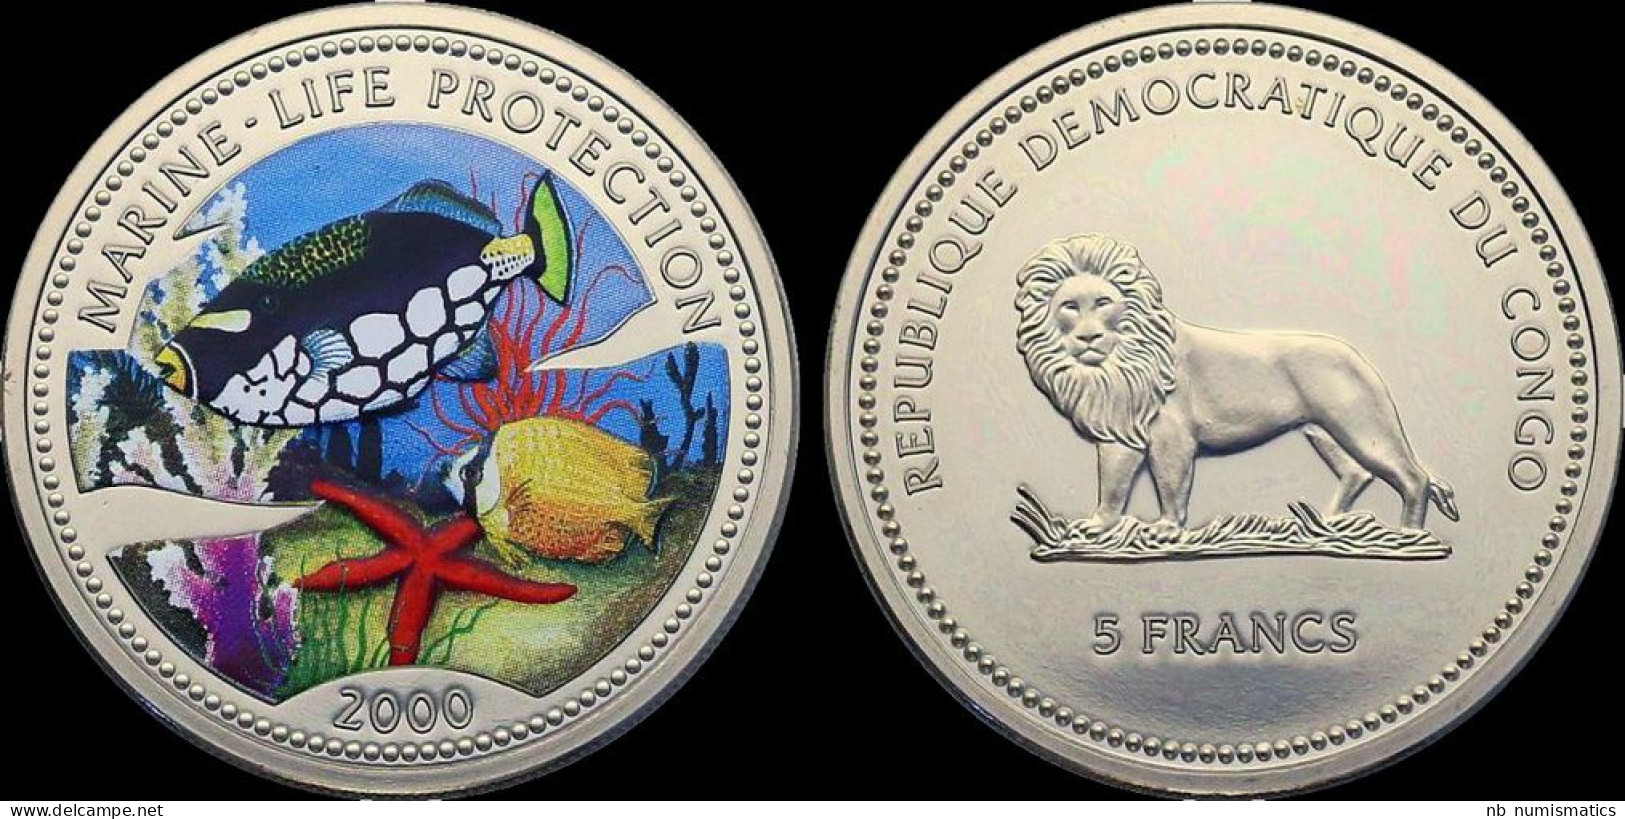 Republique Democratique Du Congo 5 Francs 2000 Marine-life Protection Proof In Plastic Capsule - Congo (Repubblica Democratica 1998)